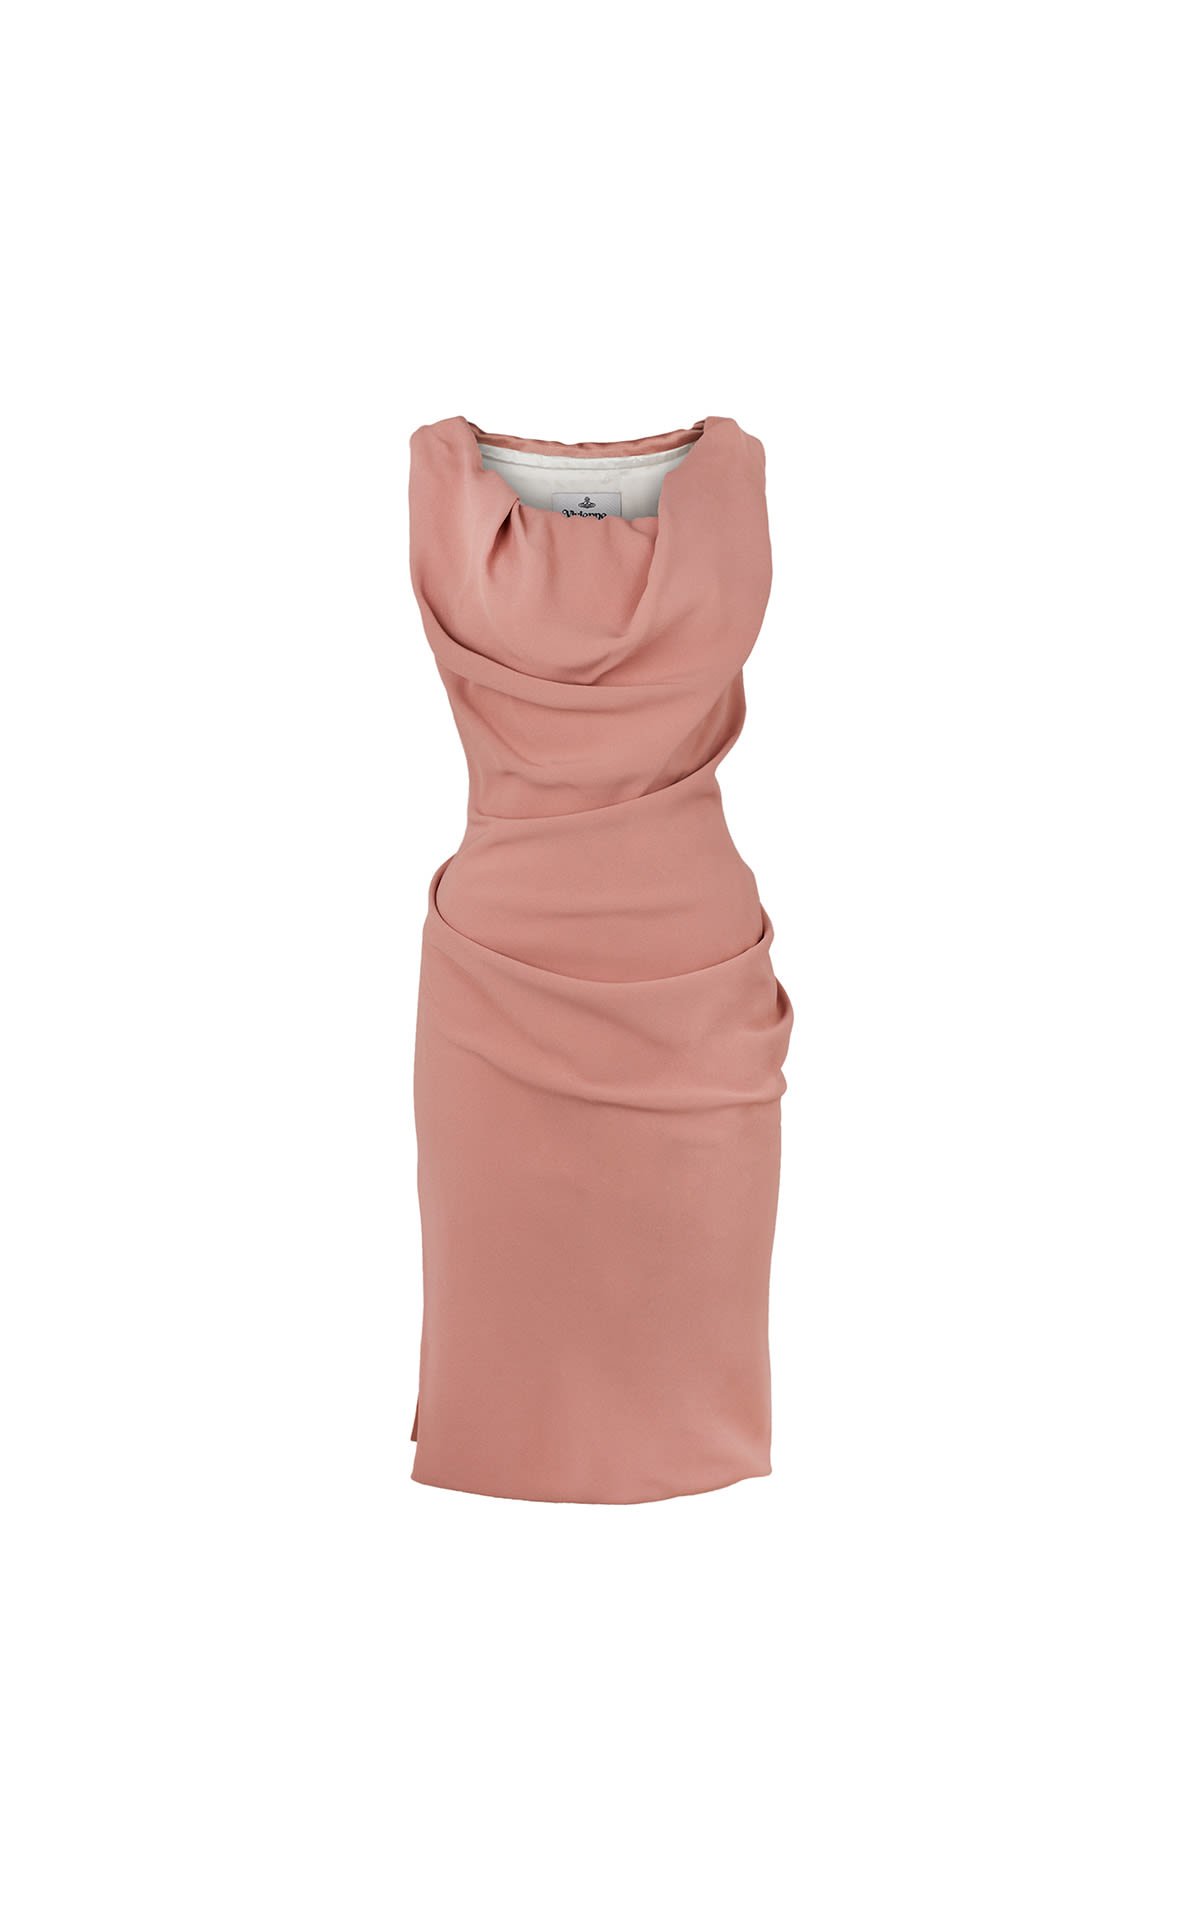 Vivienne Westwood Pink dress